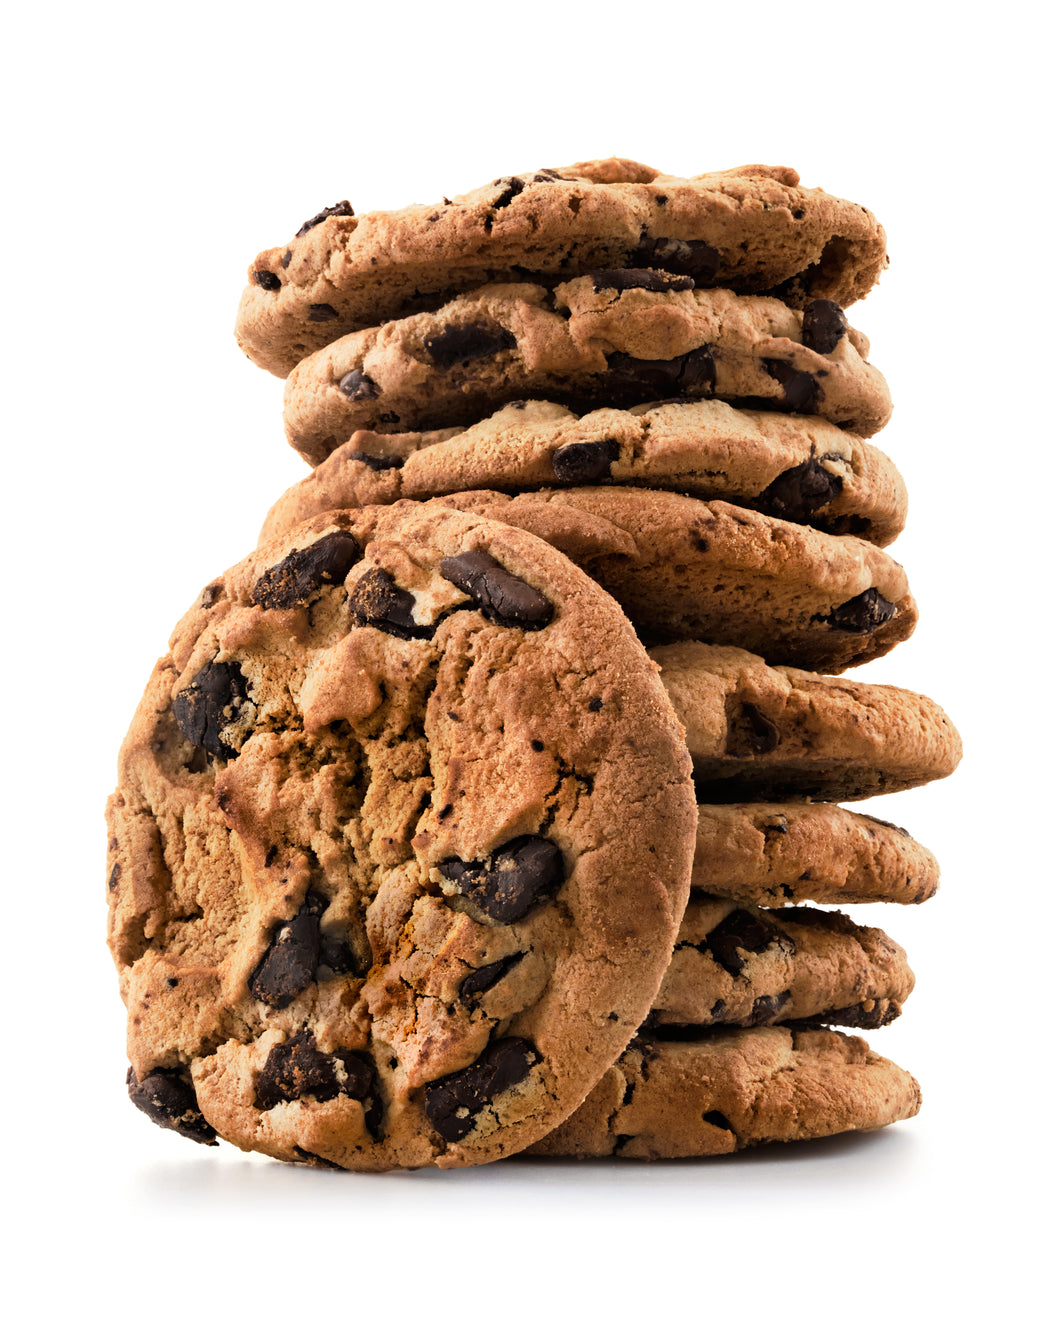 Cookies: Chocolate Chip (BUY)